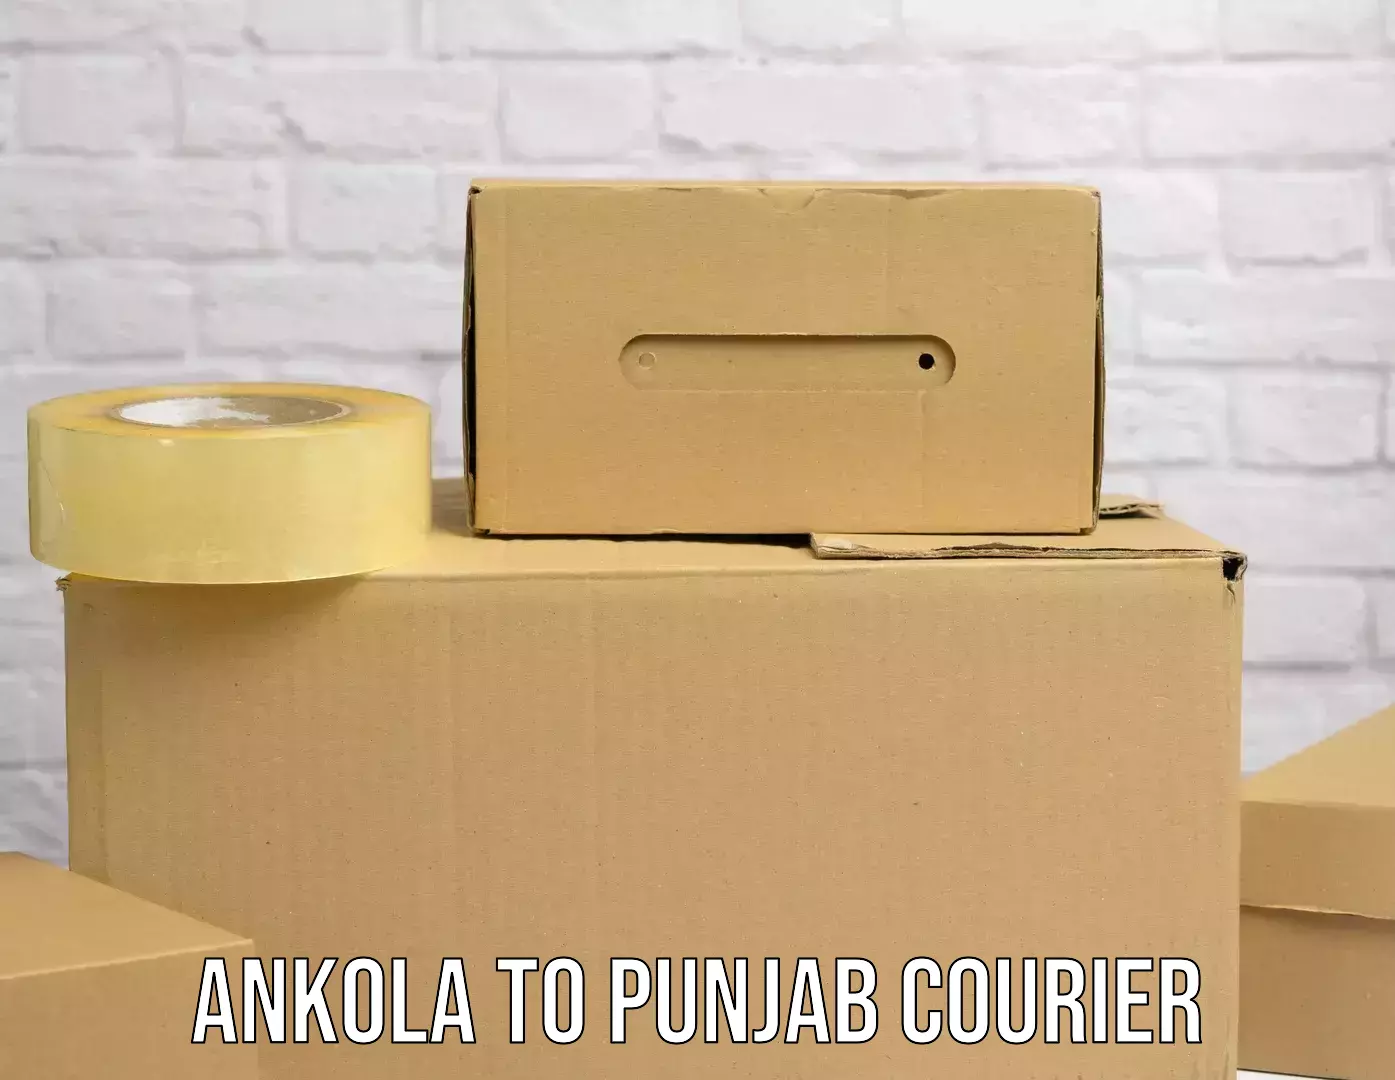 Next-generation courier services Ankola to Punjab